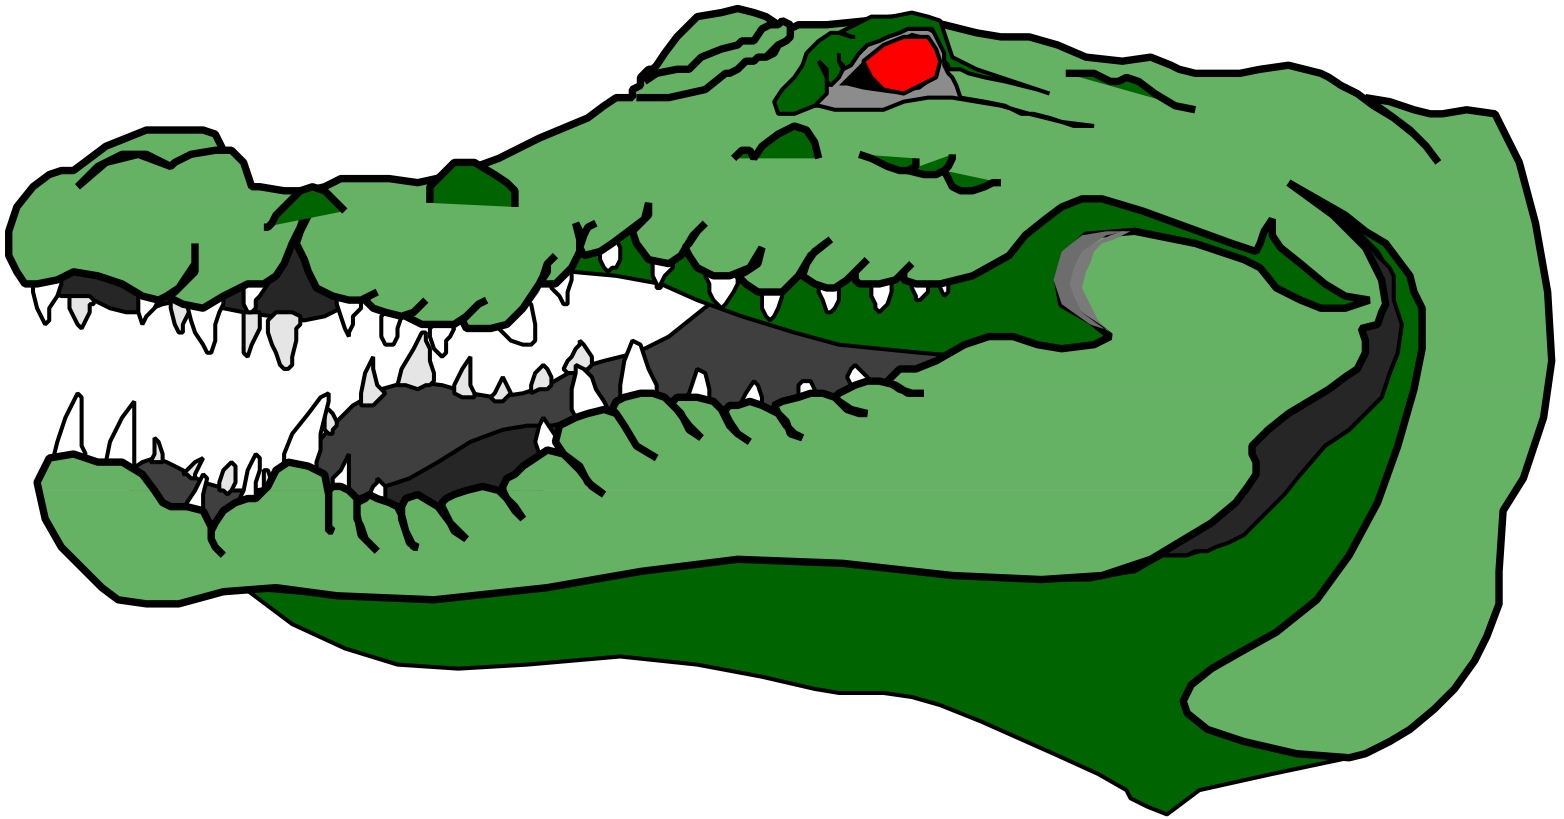 Crocodile Cartoon Images Wallpapers